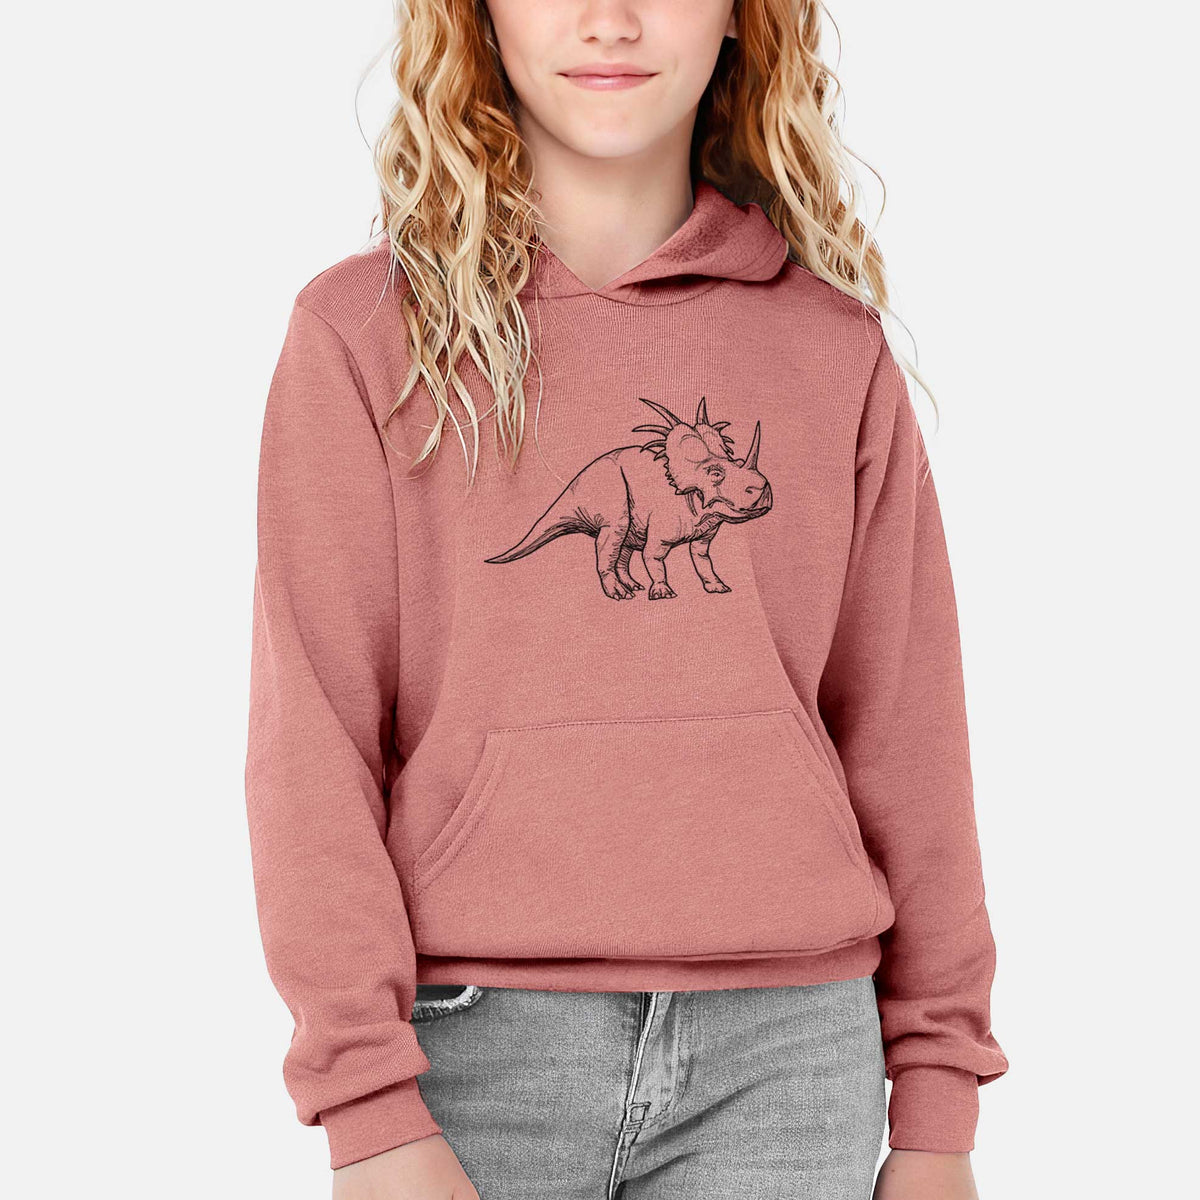 Styracosaurus Albertensis - Youth Hoodie Sweatshirt